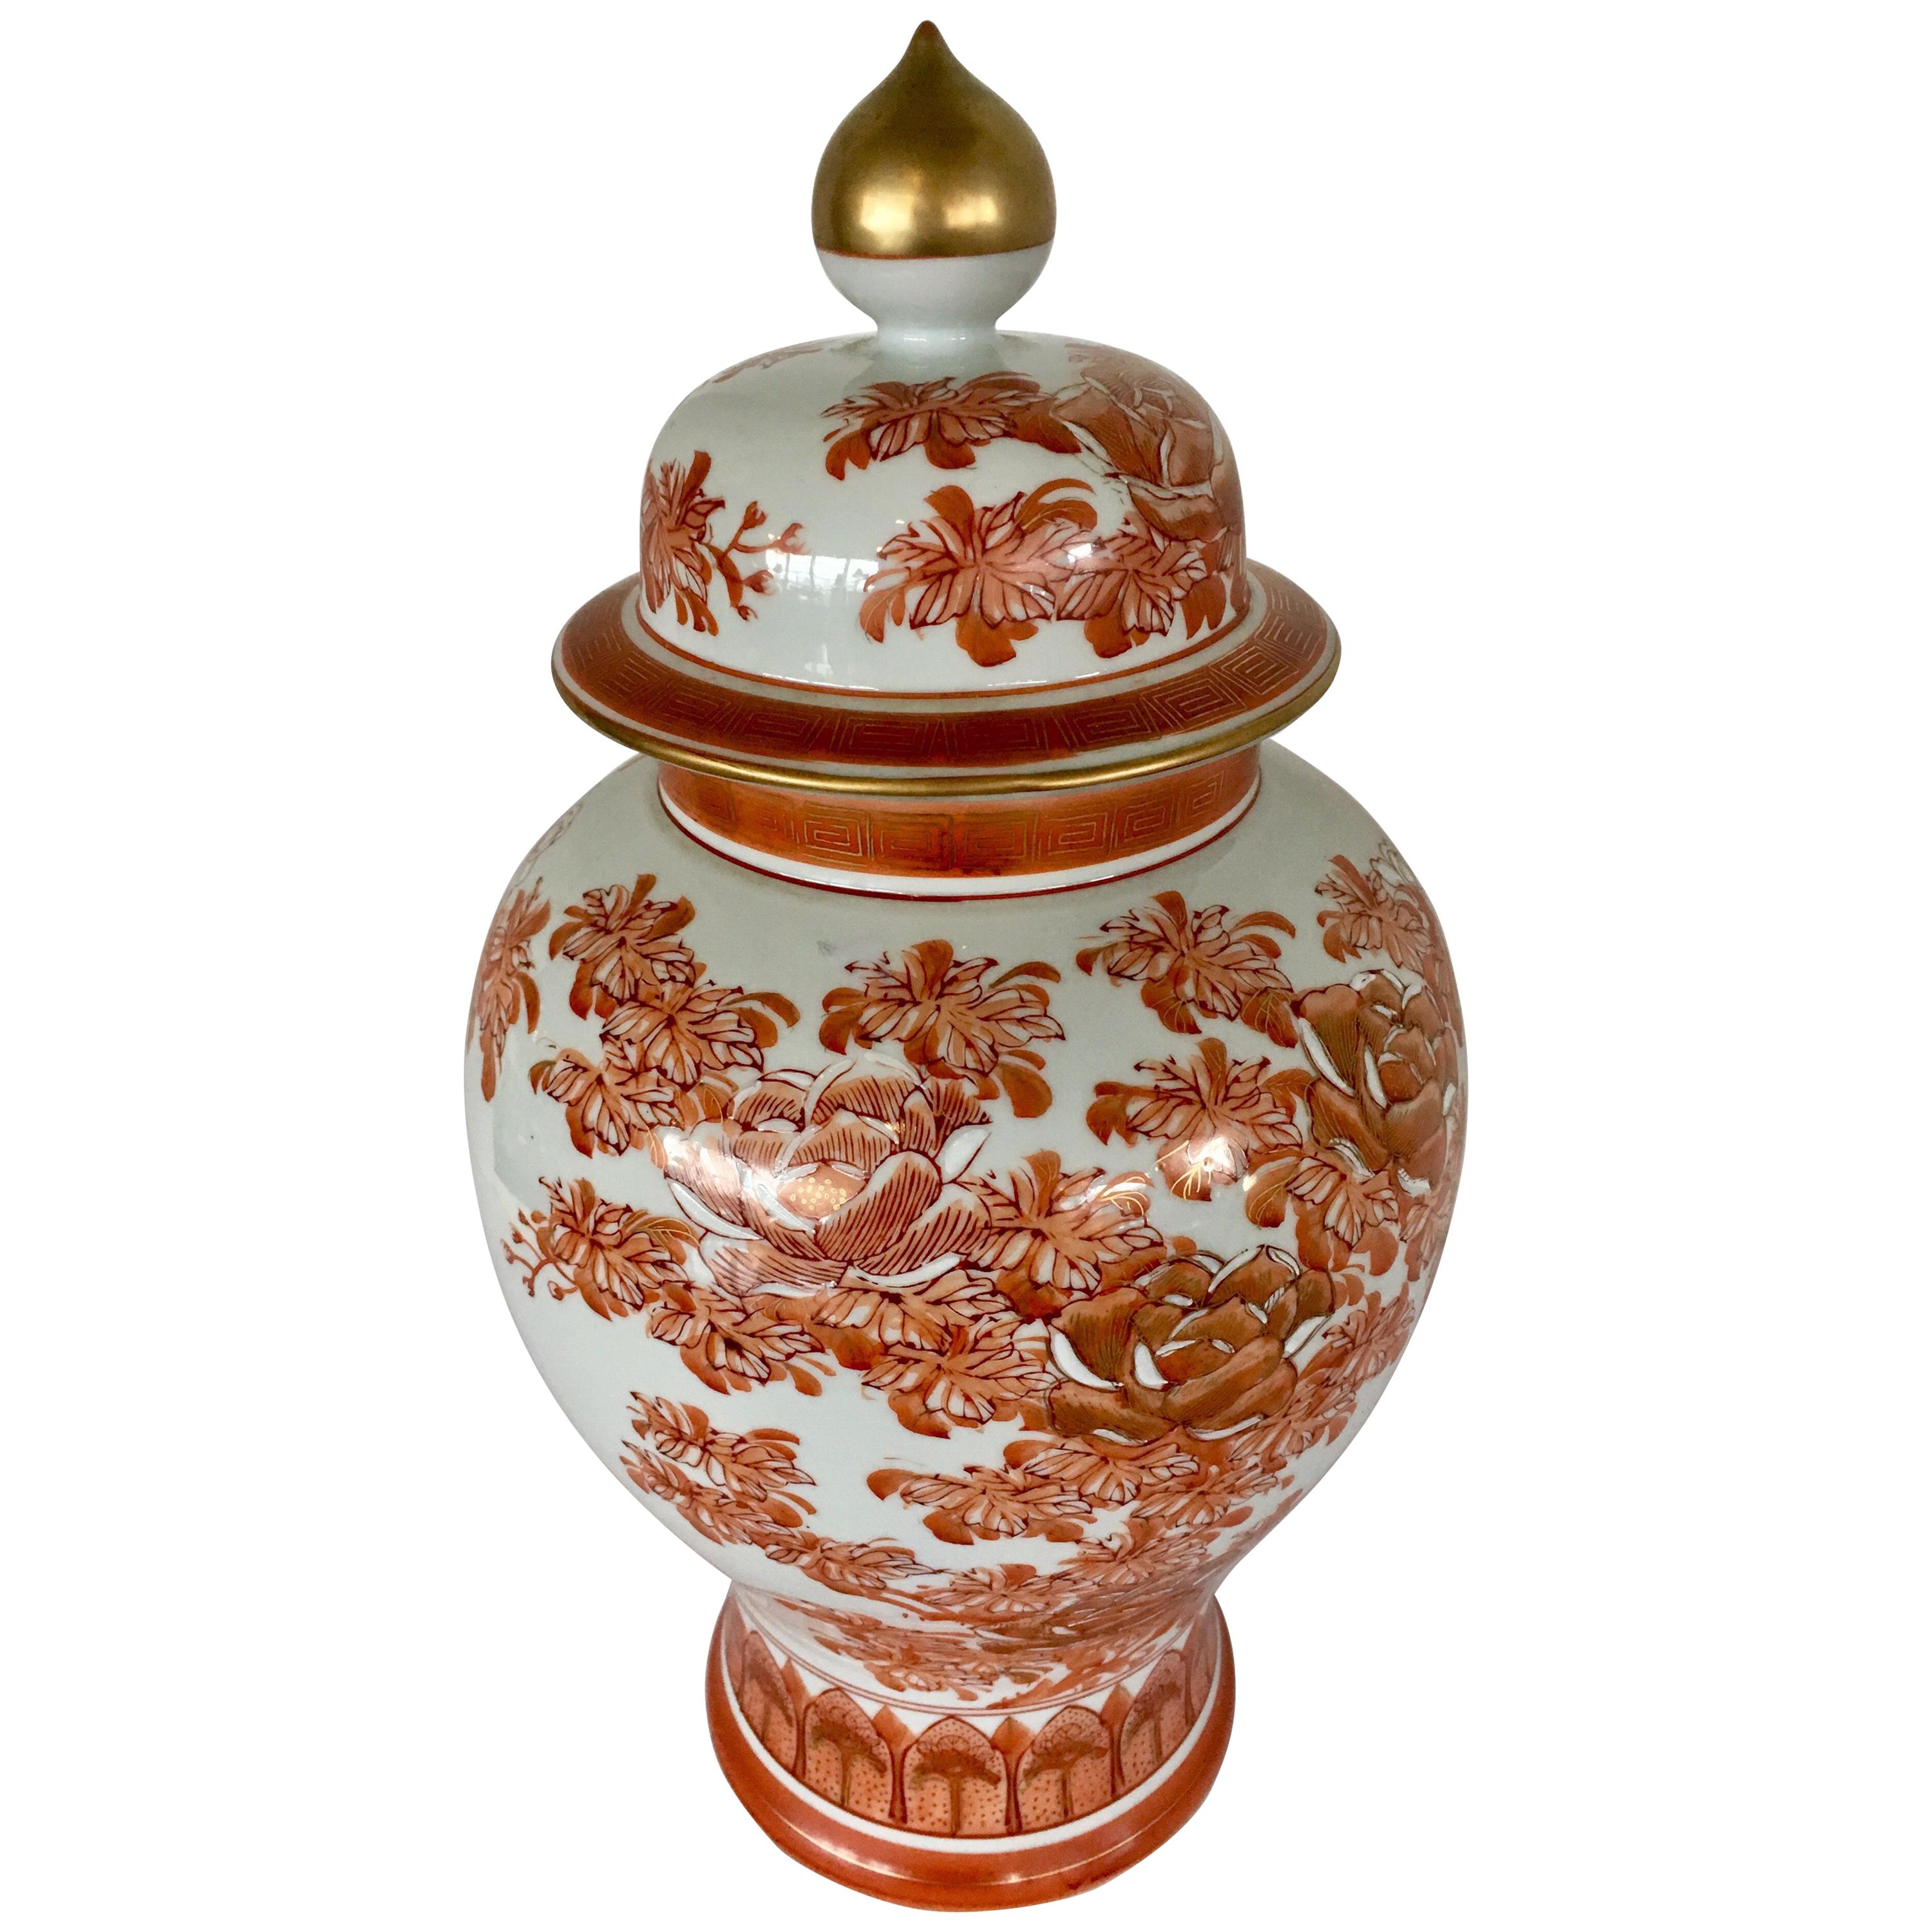 Japanese Orange and White Porcelain Ginger Jar Urn Vase